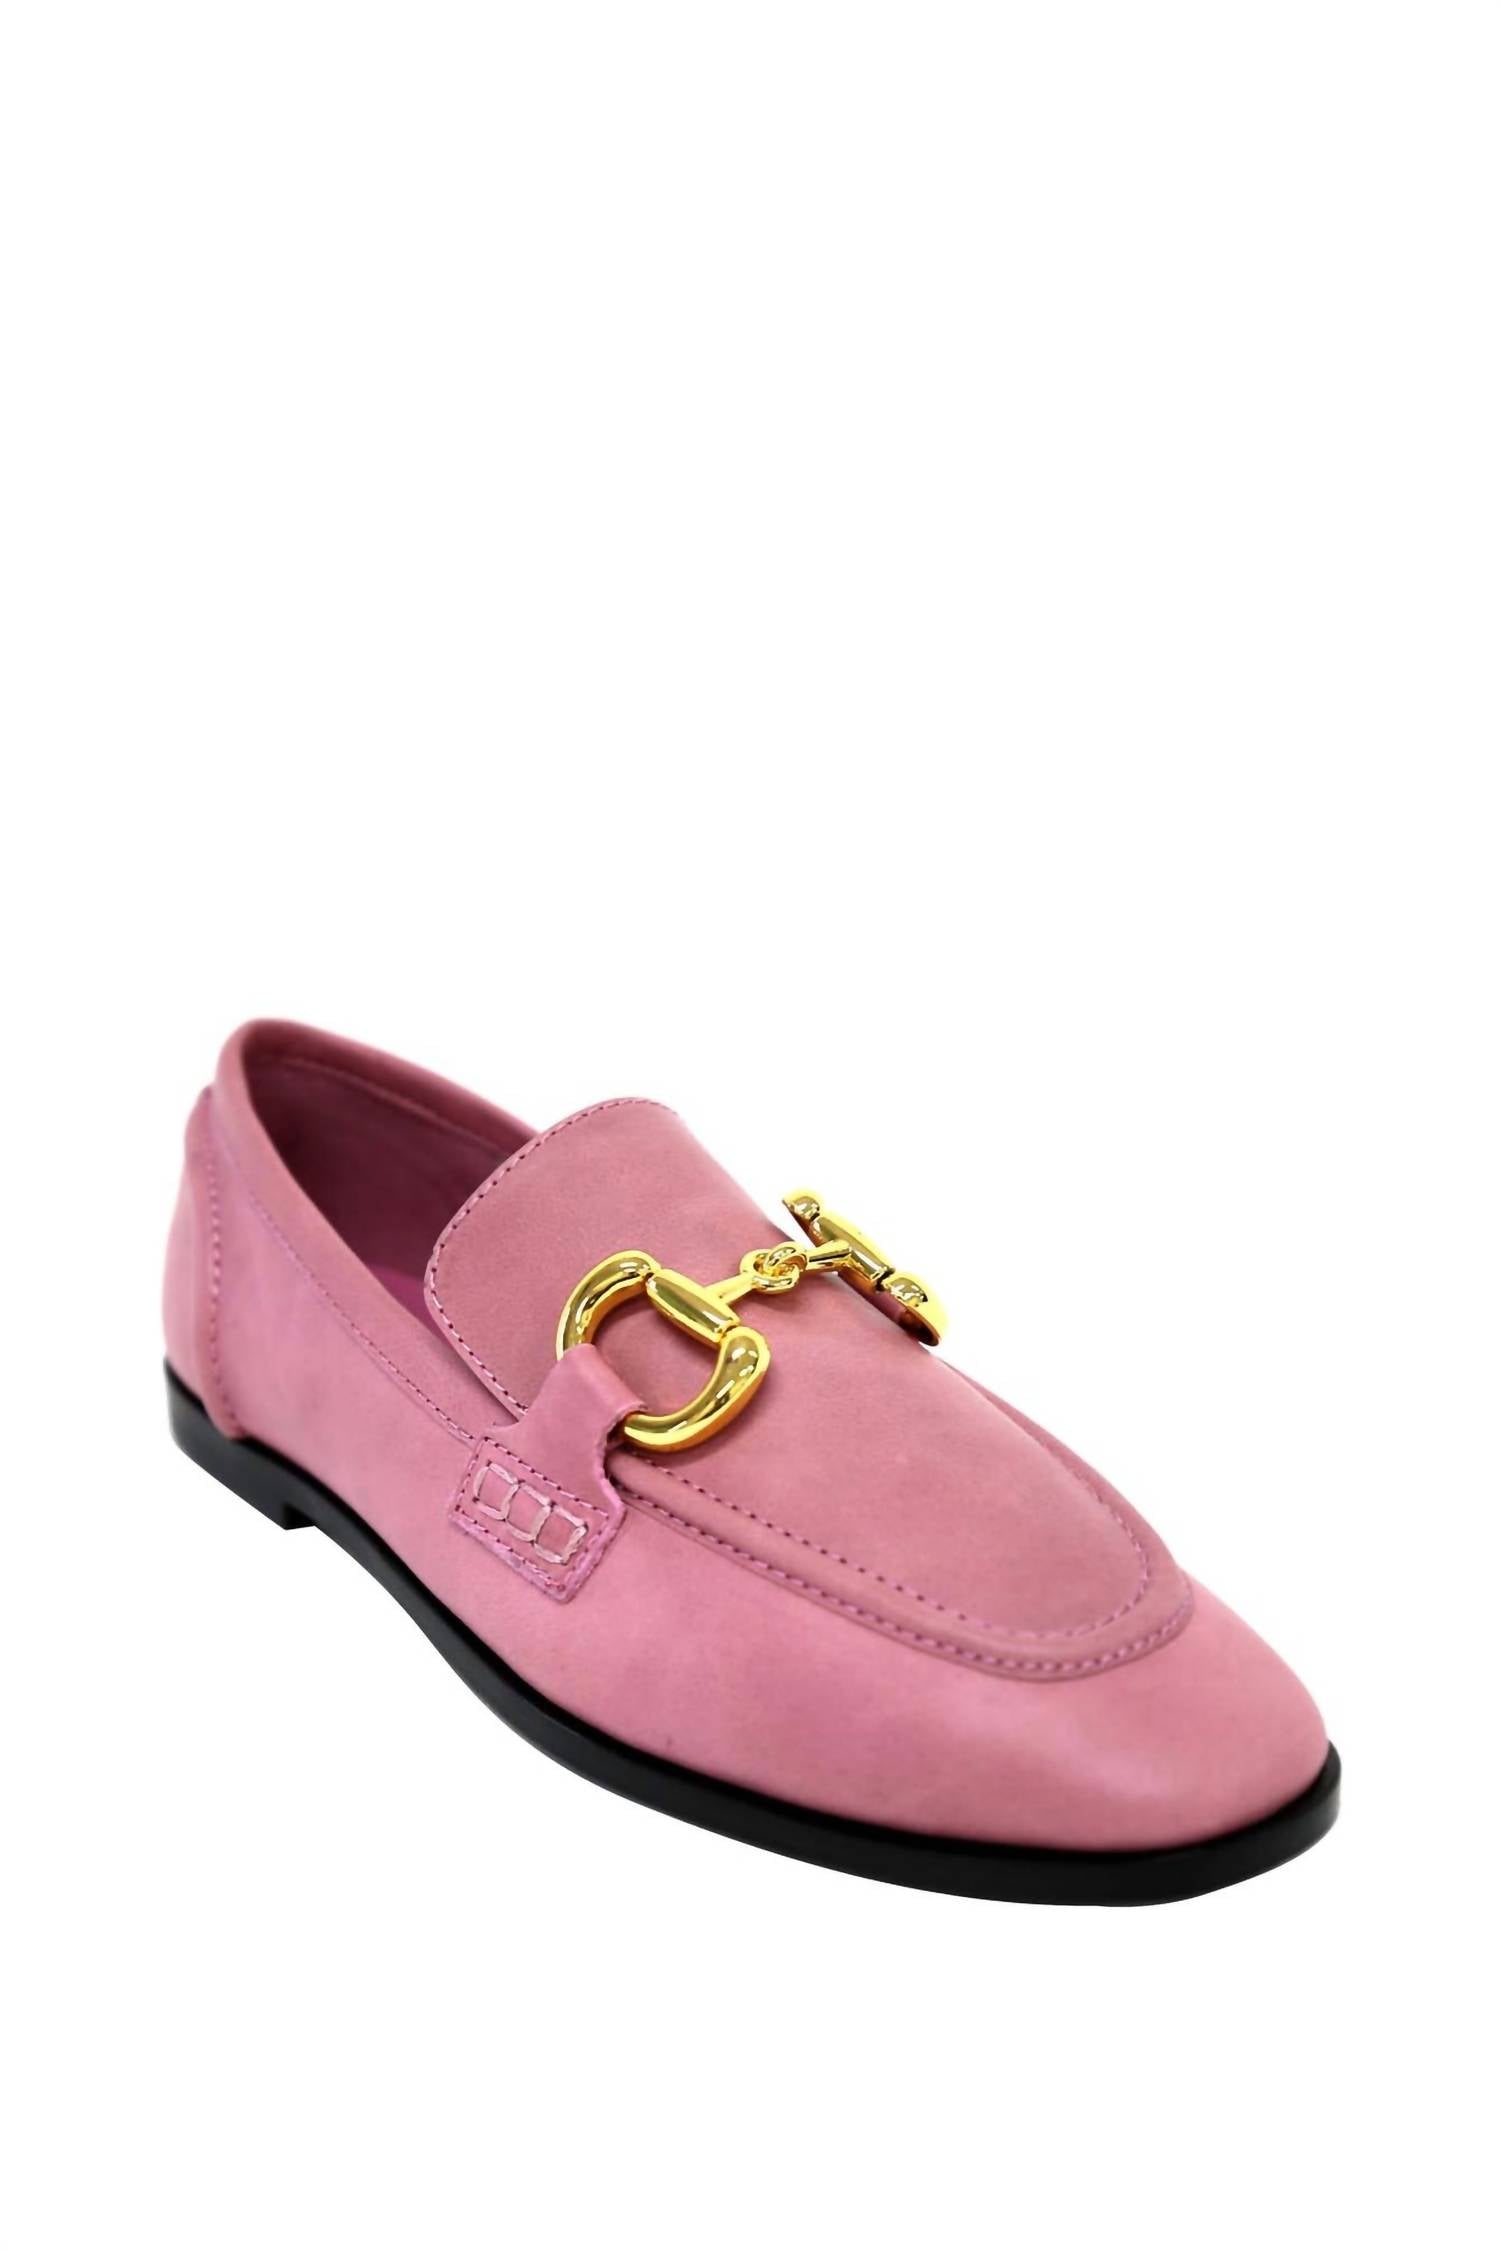 JEFFREY CAMPBELL Women's Velviteen Flat Loafer In Pink Rose/gold